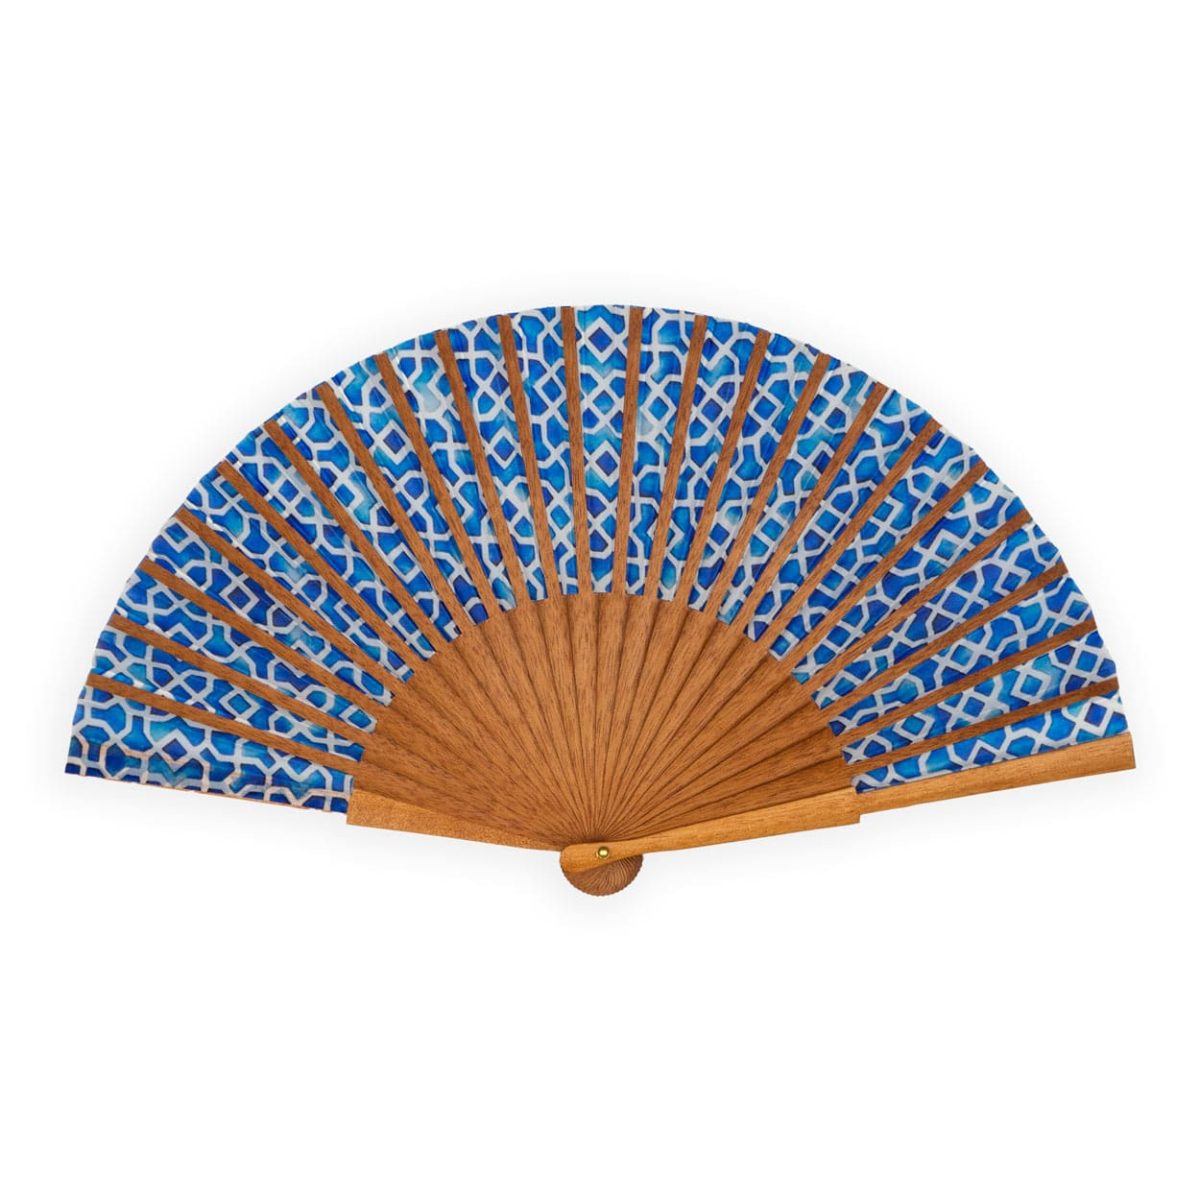 Islamic art inspired blue and white silk fan